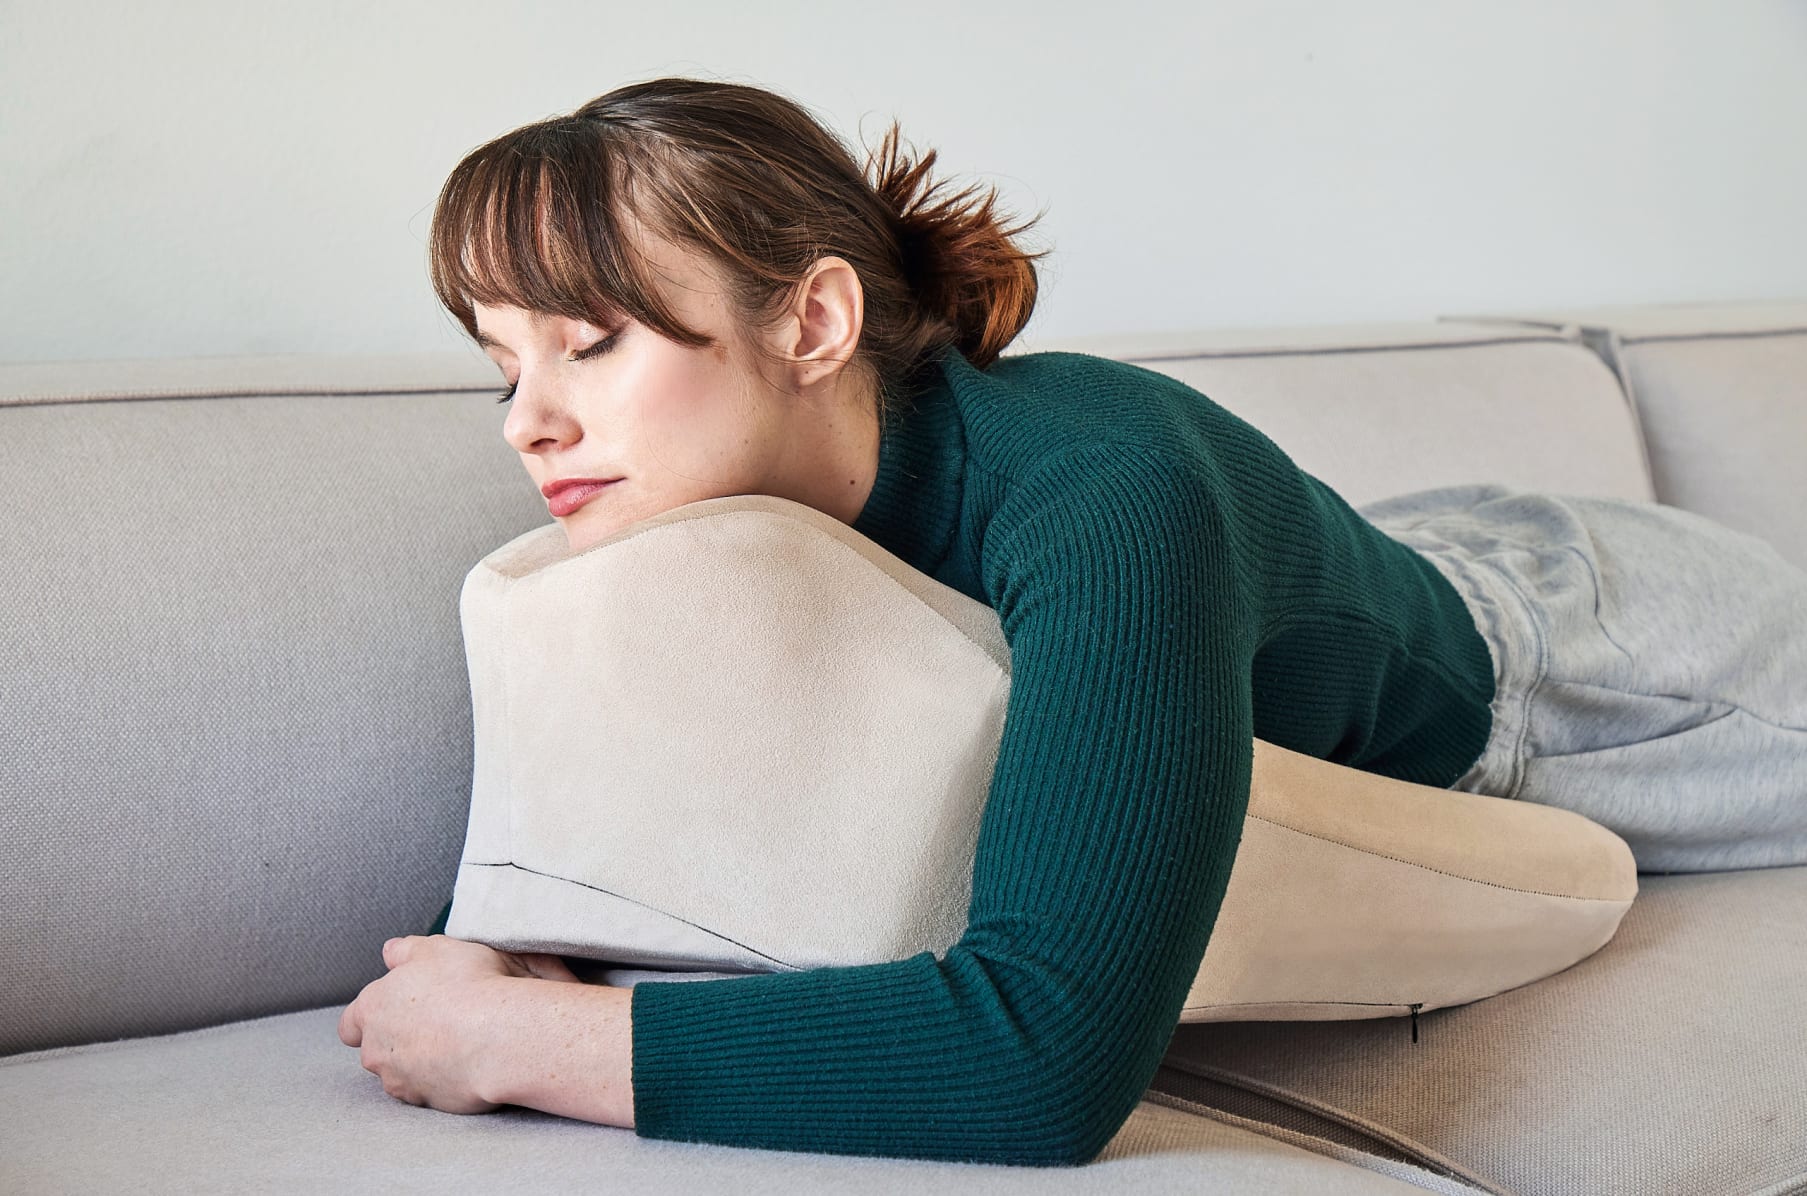 Prone Cushion: An ergonomic cushion for lying down